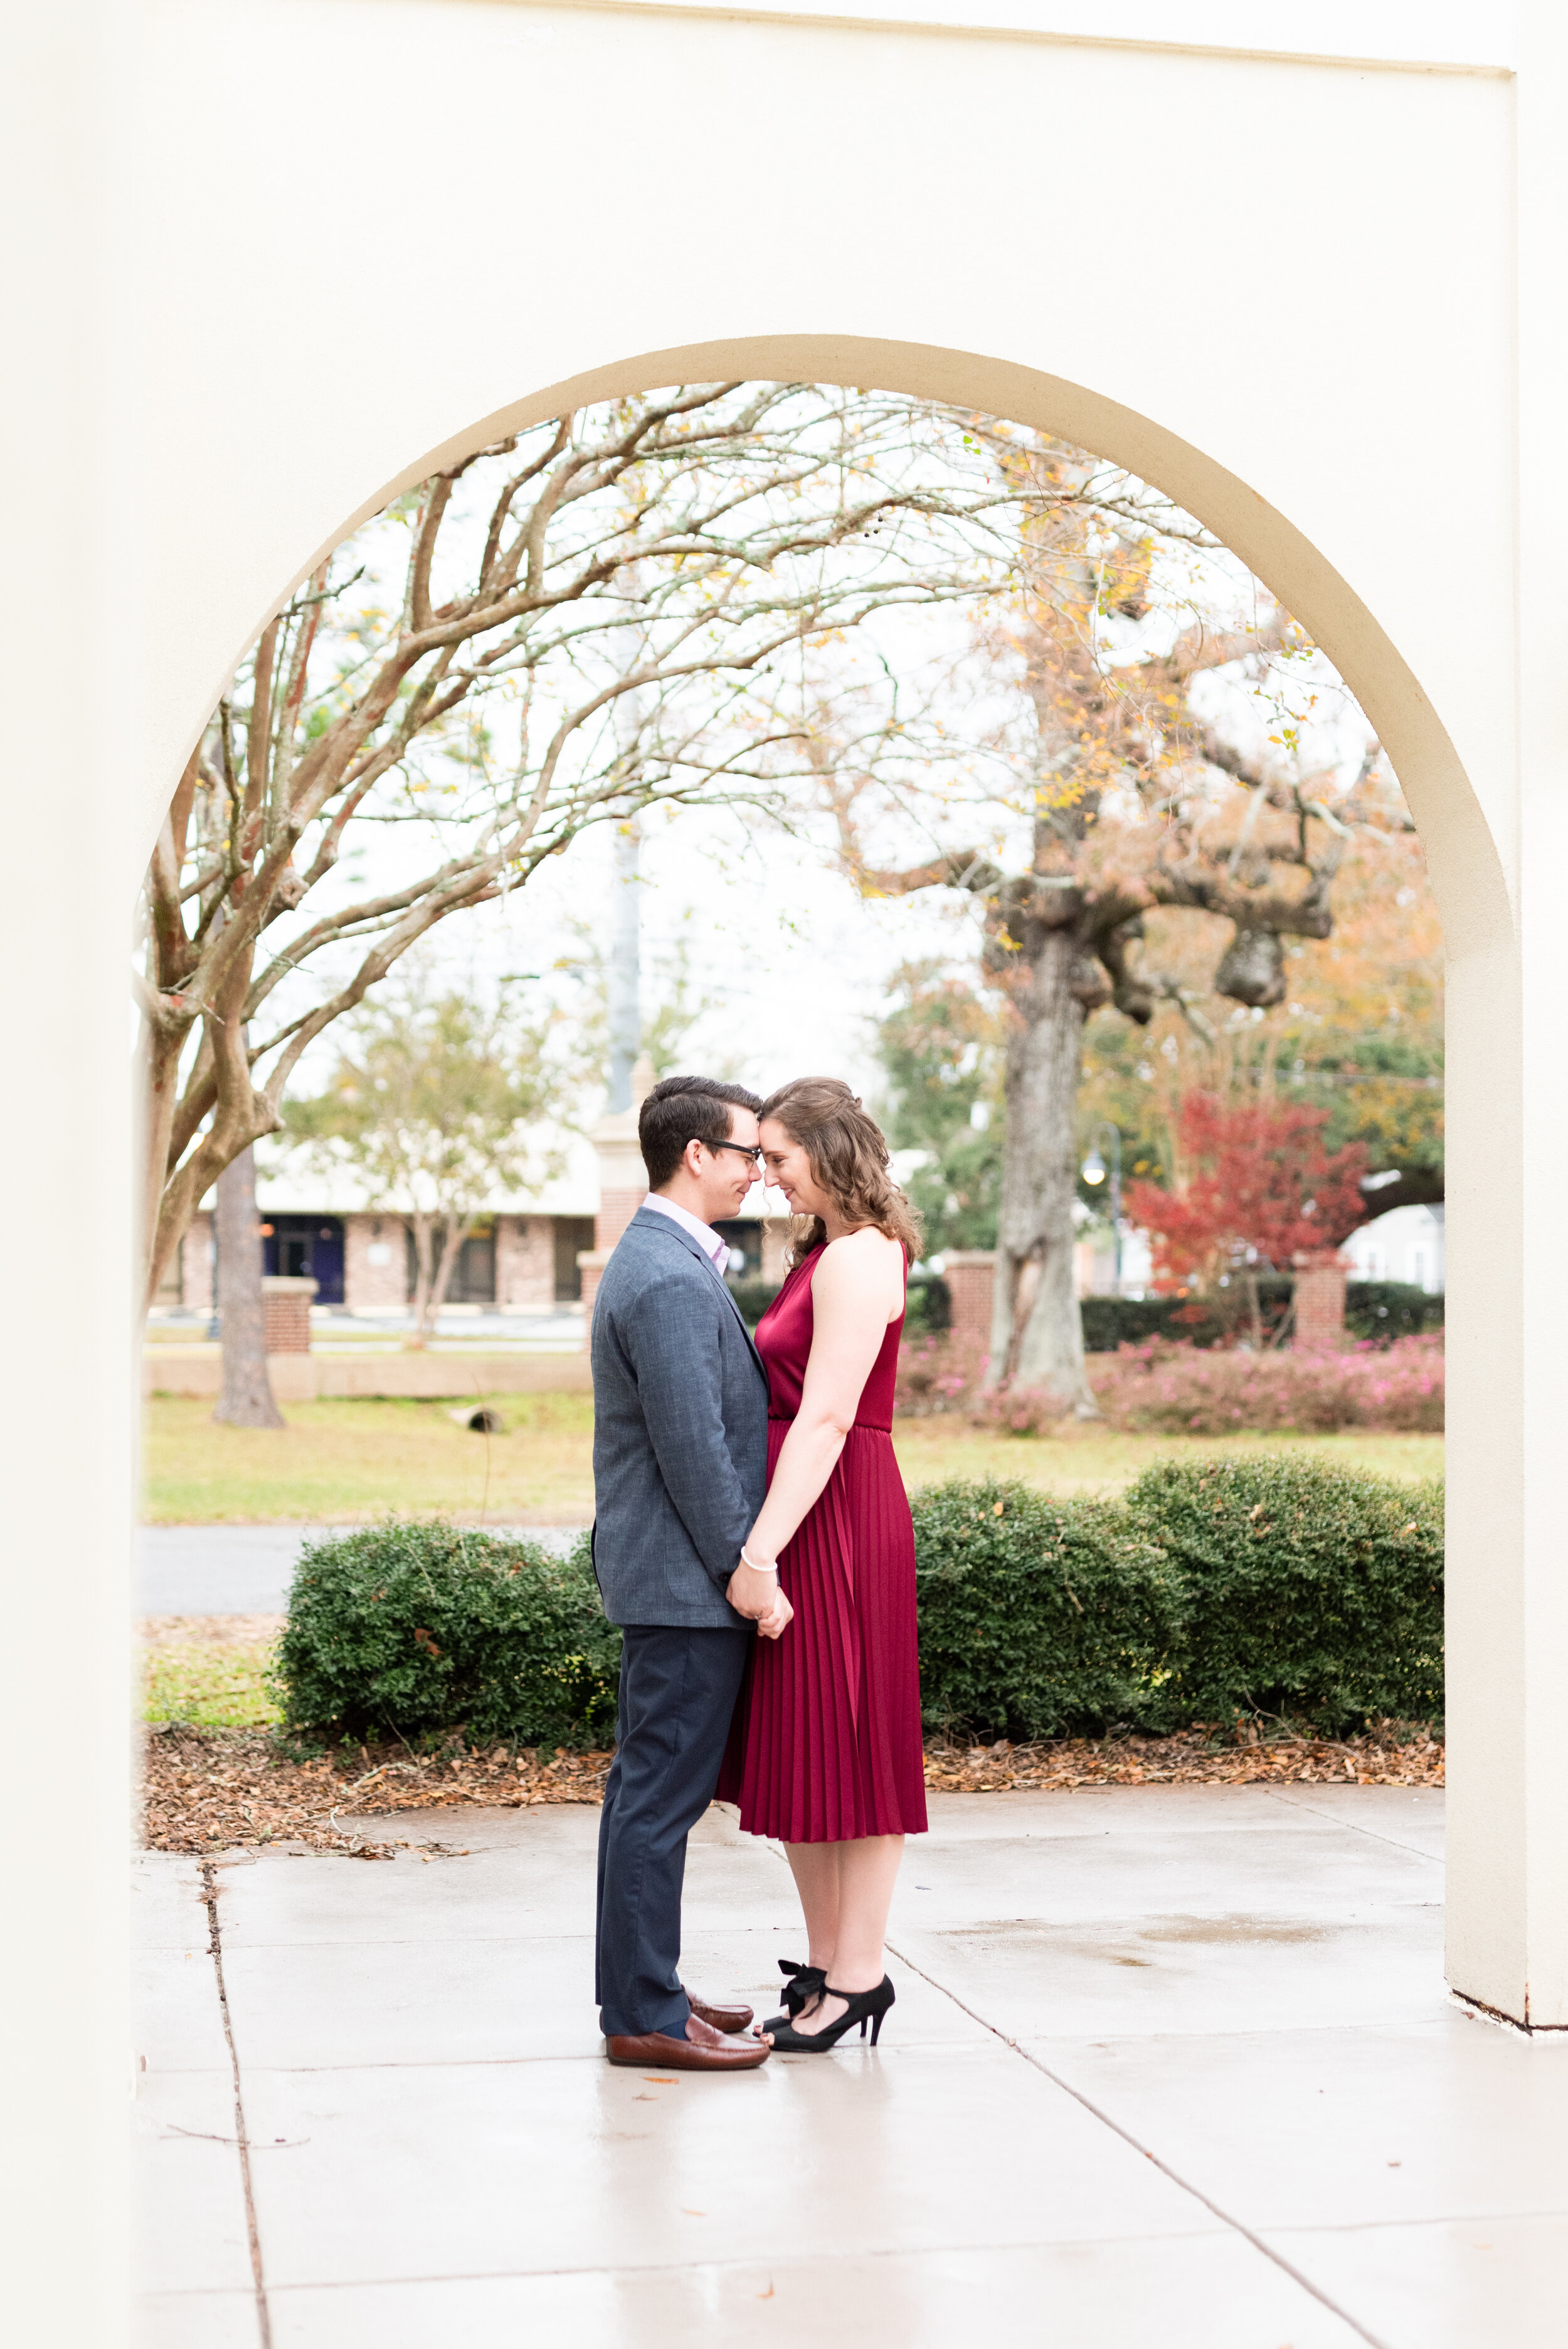 Carpe Diem Engagement Photoshoot | Spring Hill College Engagement Photoshoot | Rainy Day Engagement Photoshoot | Photography by Kristen Marcus Photography